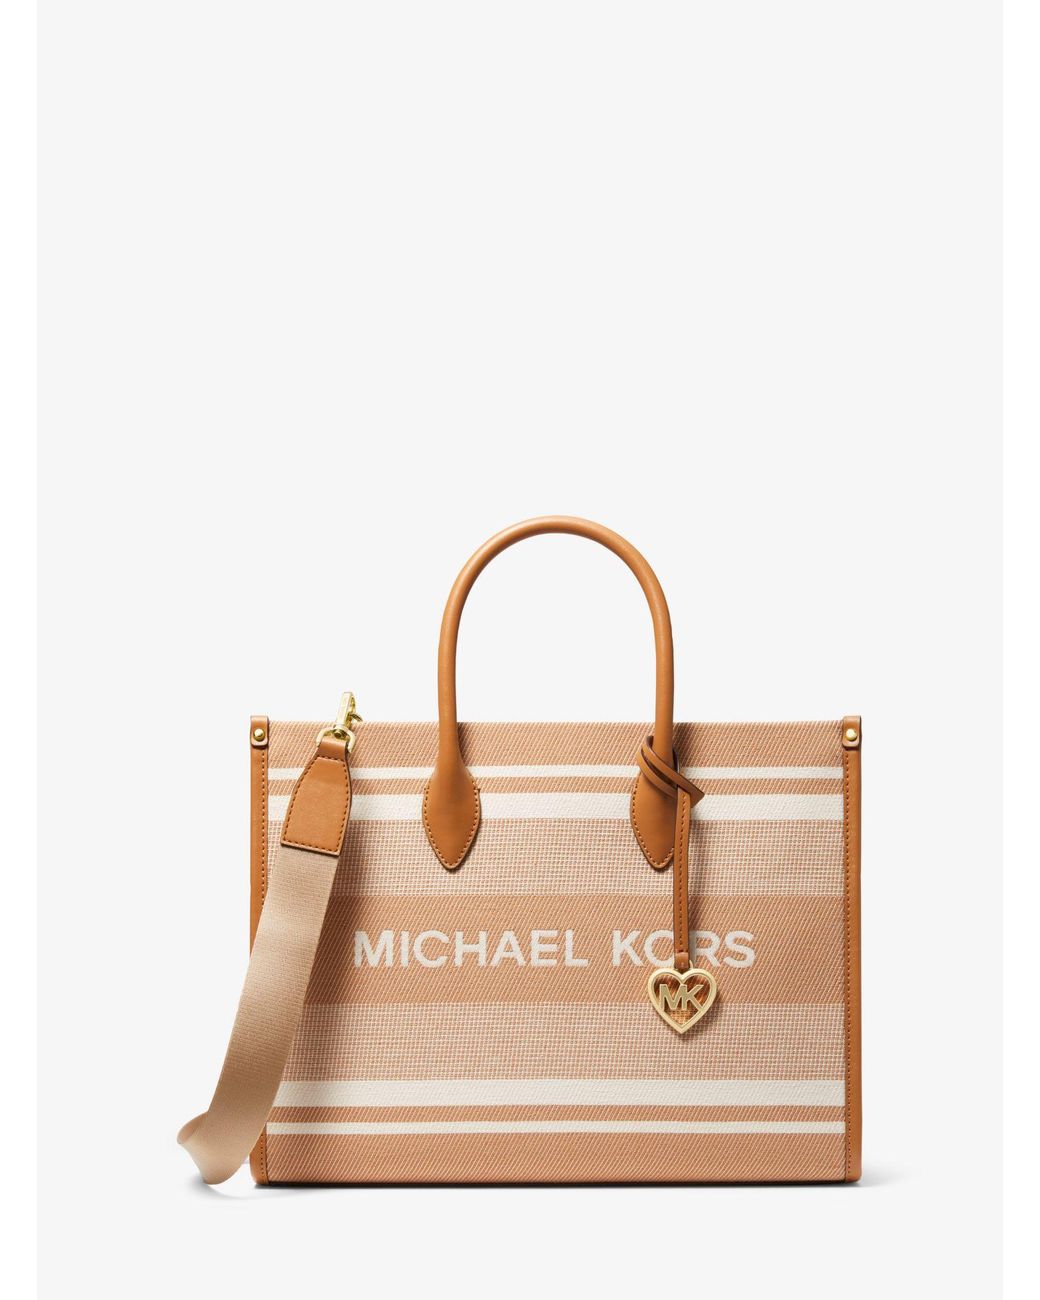 Michael Kors Handbags maeve sm Women 30T2G5VT1BBRNACORN Fabric 20625